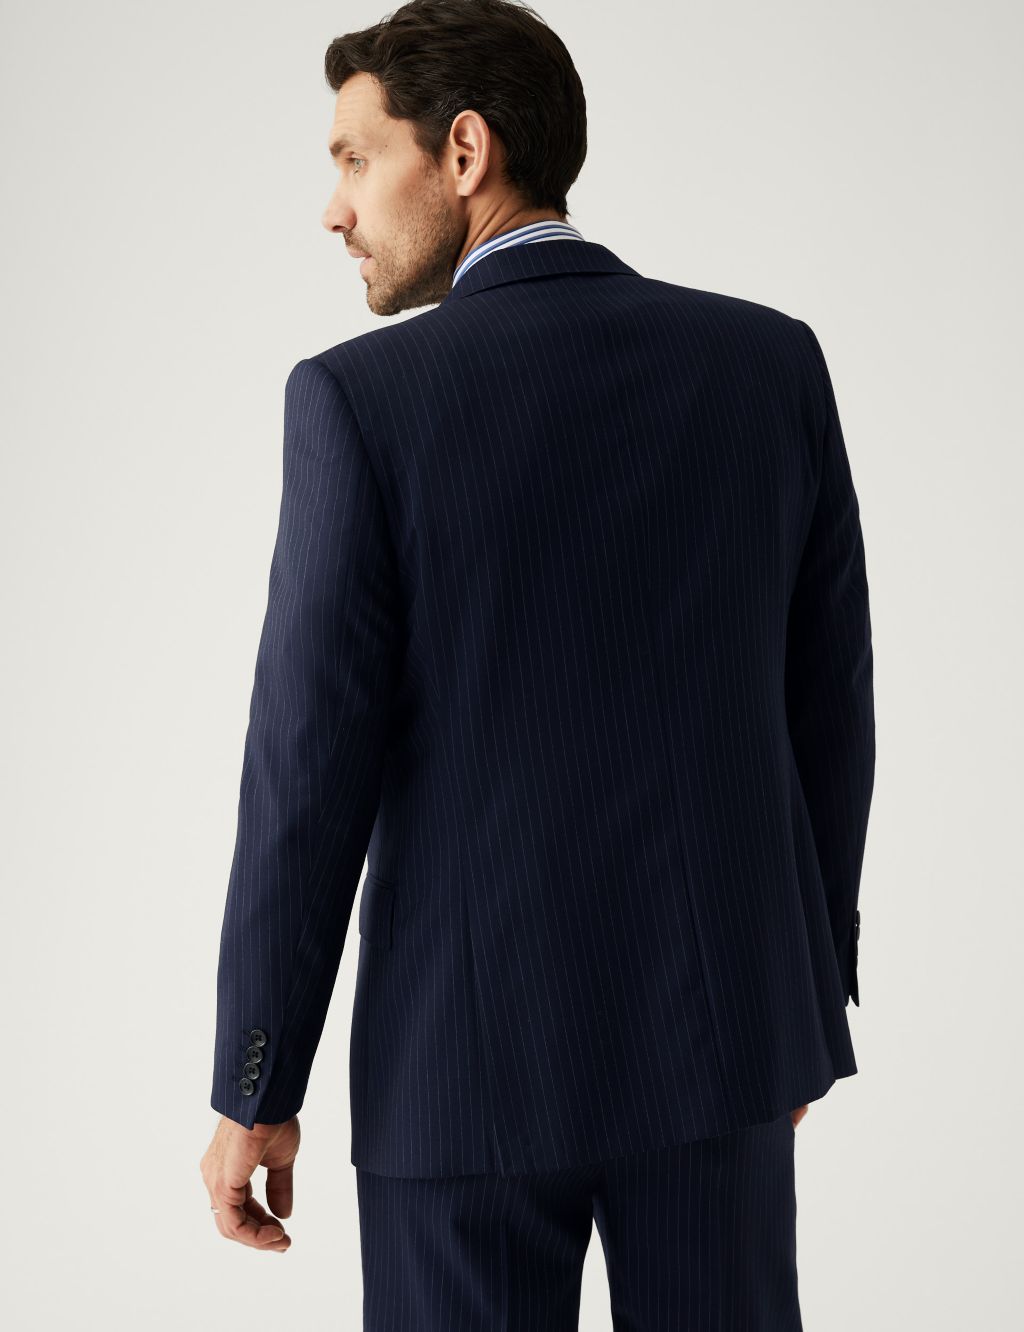 Wool Rich Pinstripe Suit Jacket image 5